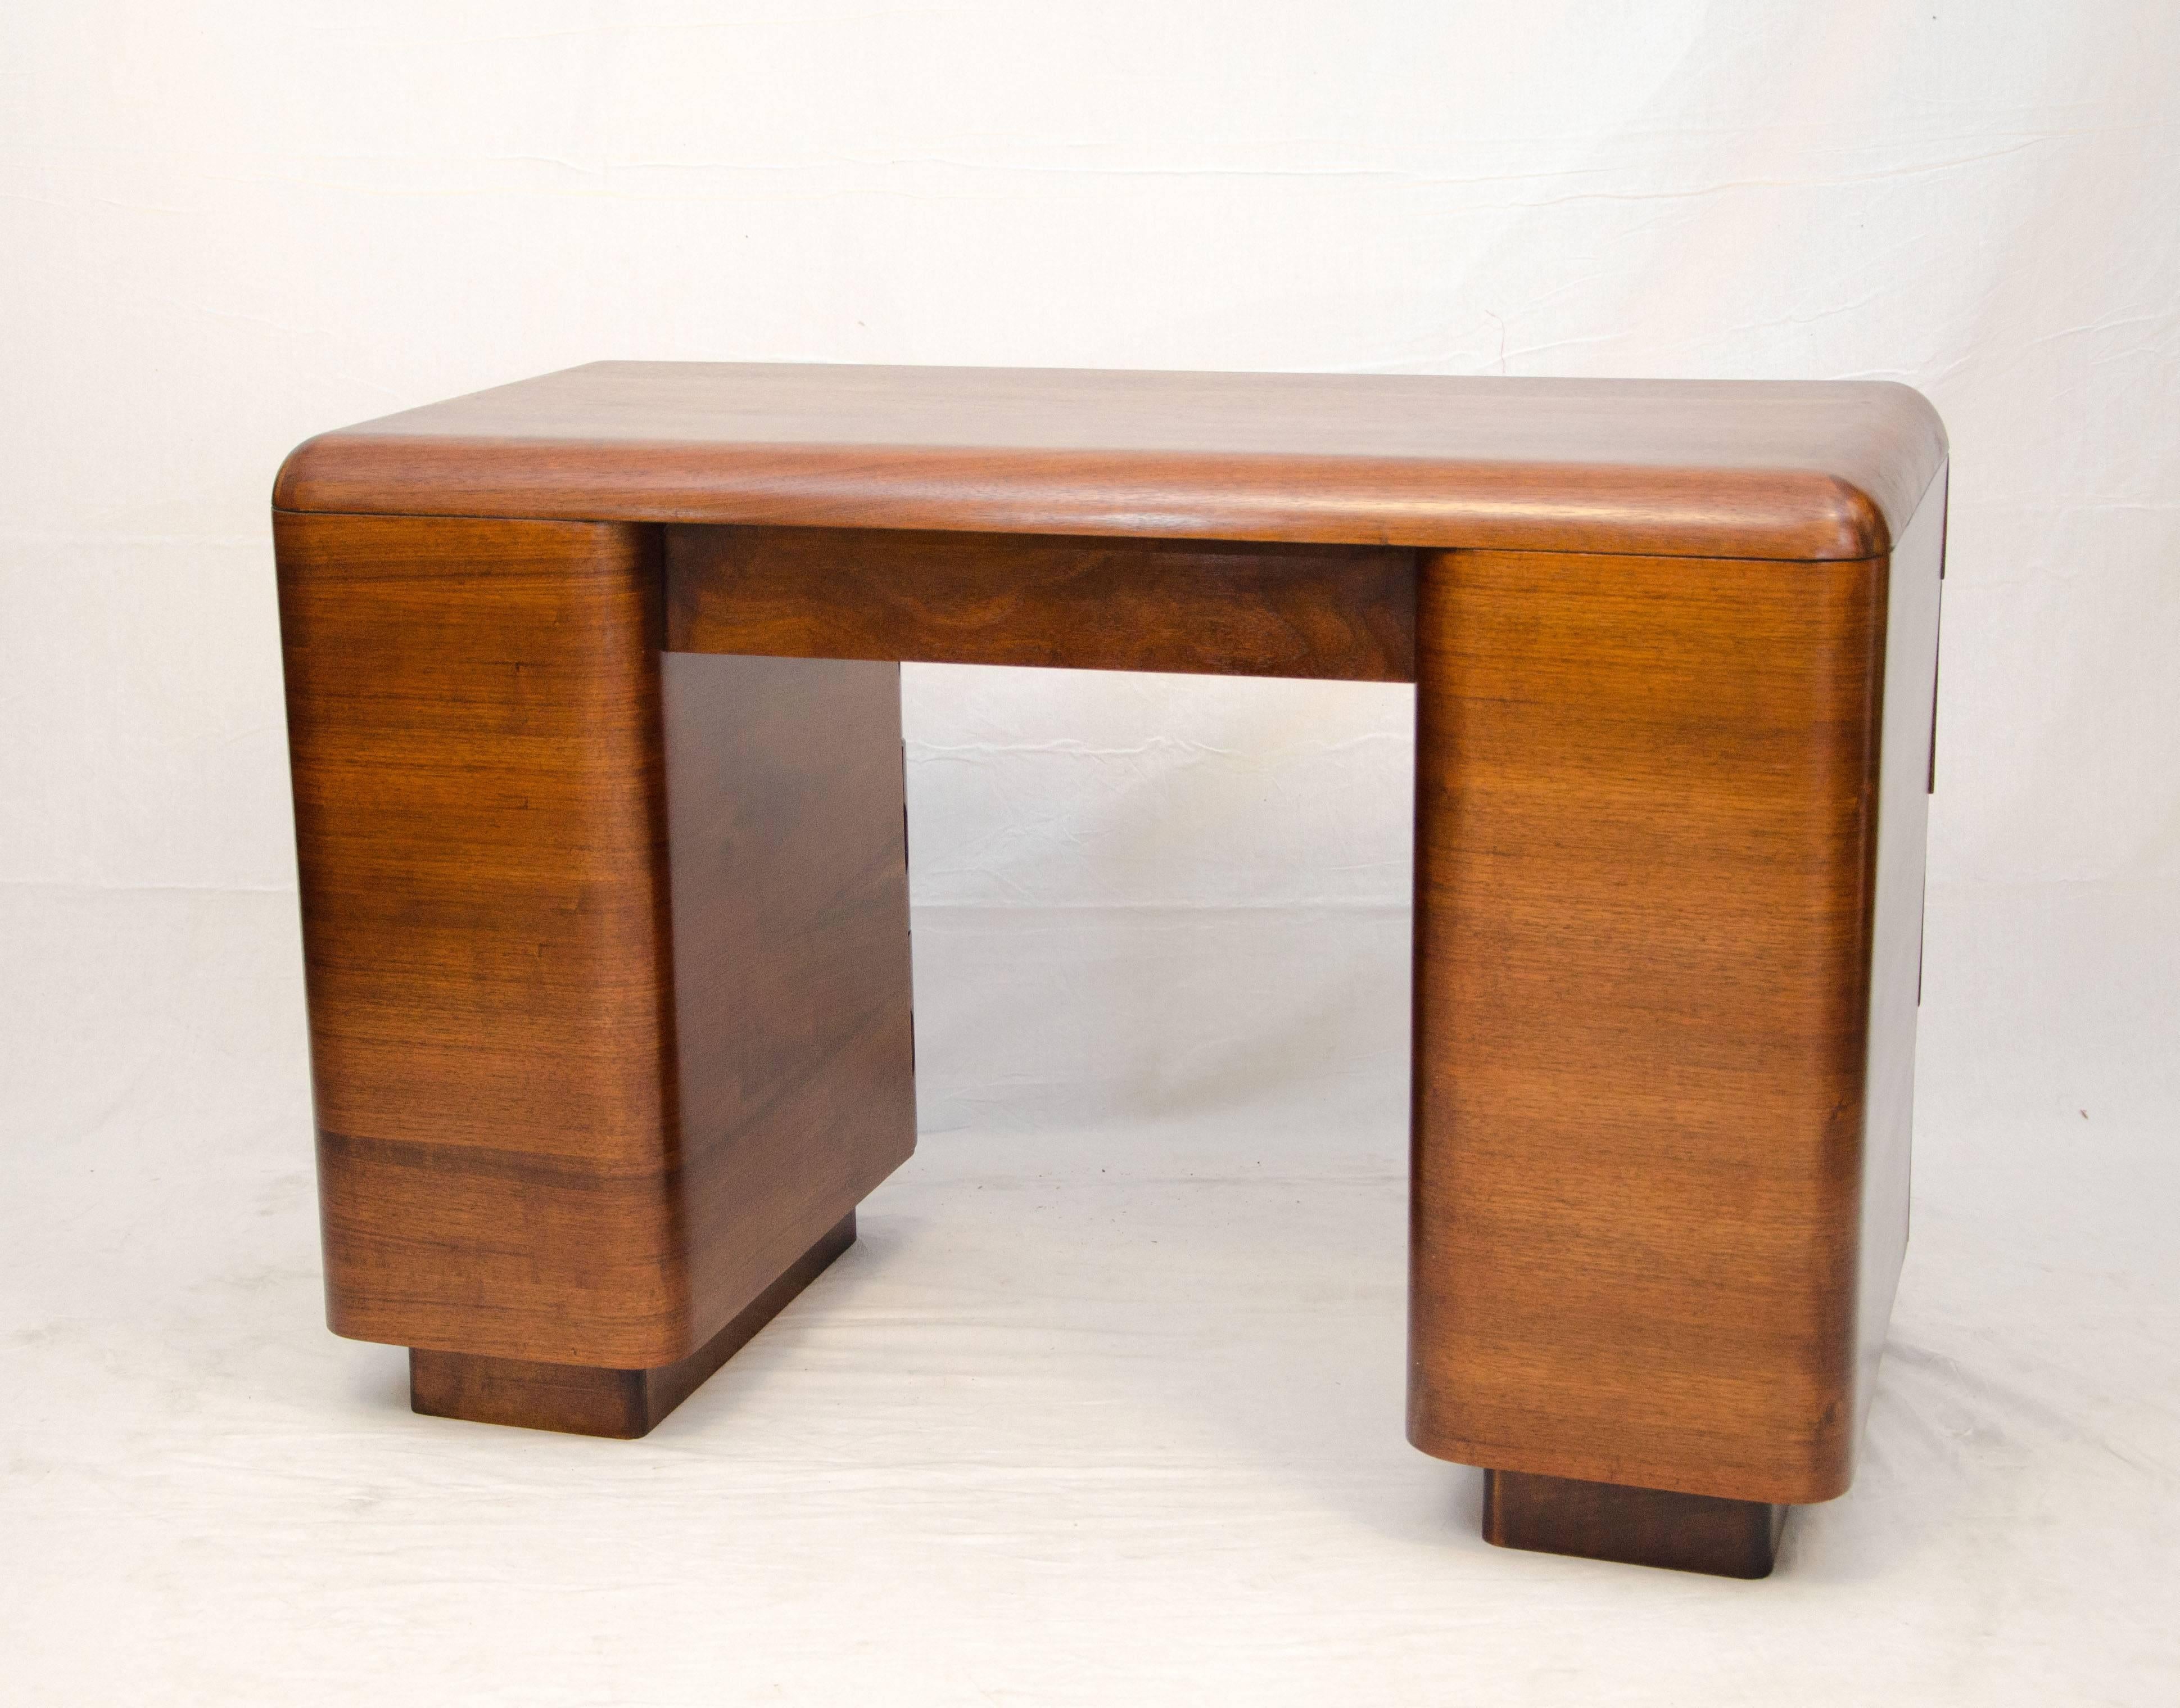 Molded Moderne Art Deco Walnut Desk by Paul Goldman for Plymold Corp